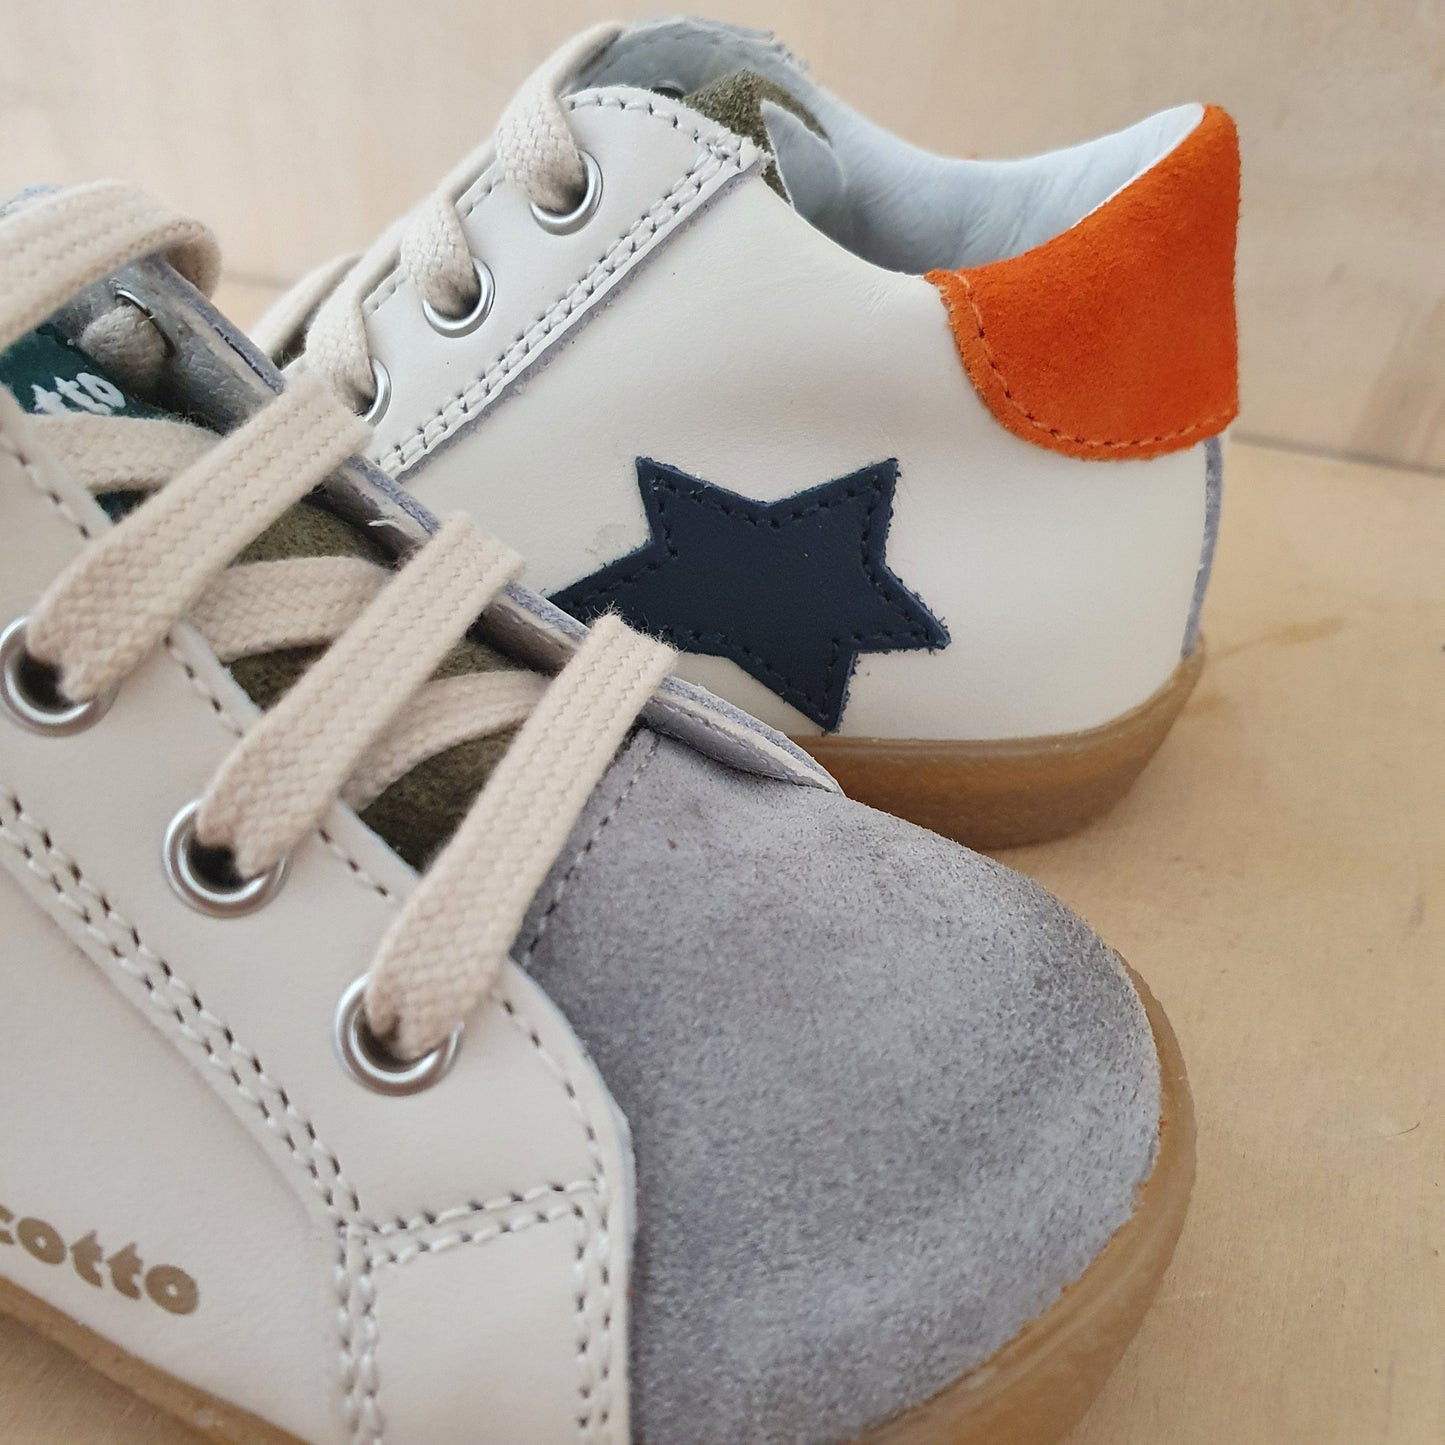 FALCOTTO - stapsneaker alnoite  - grey milk orange